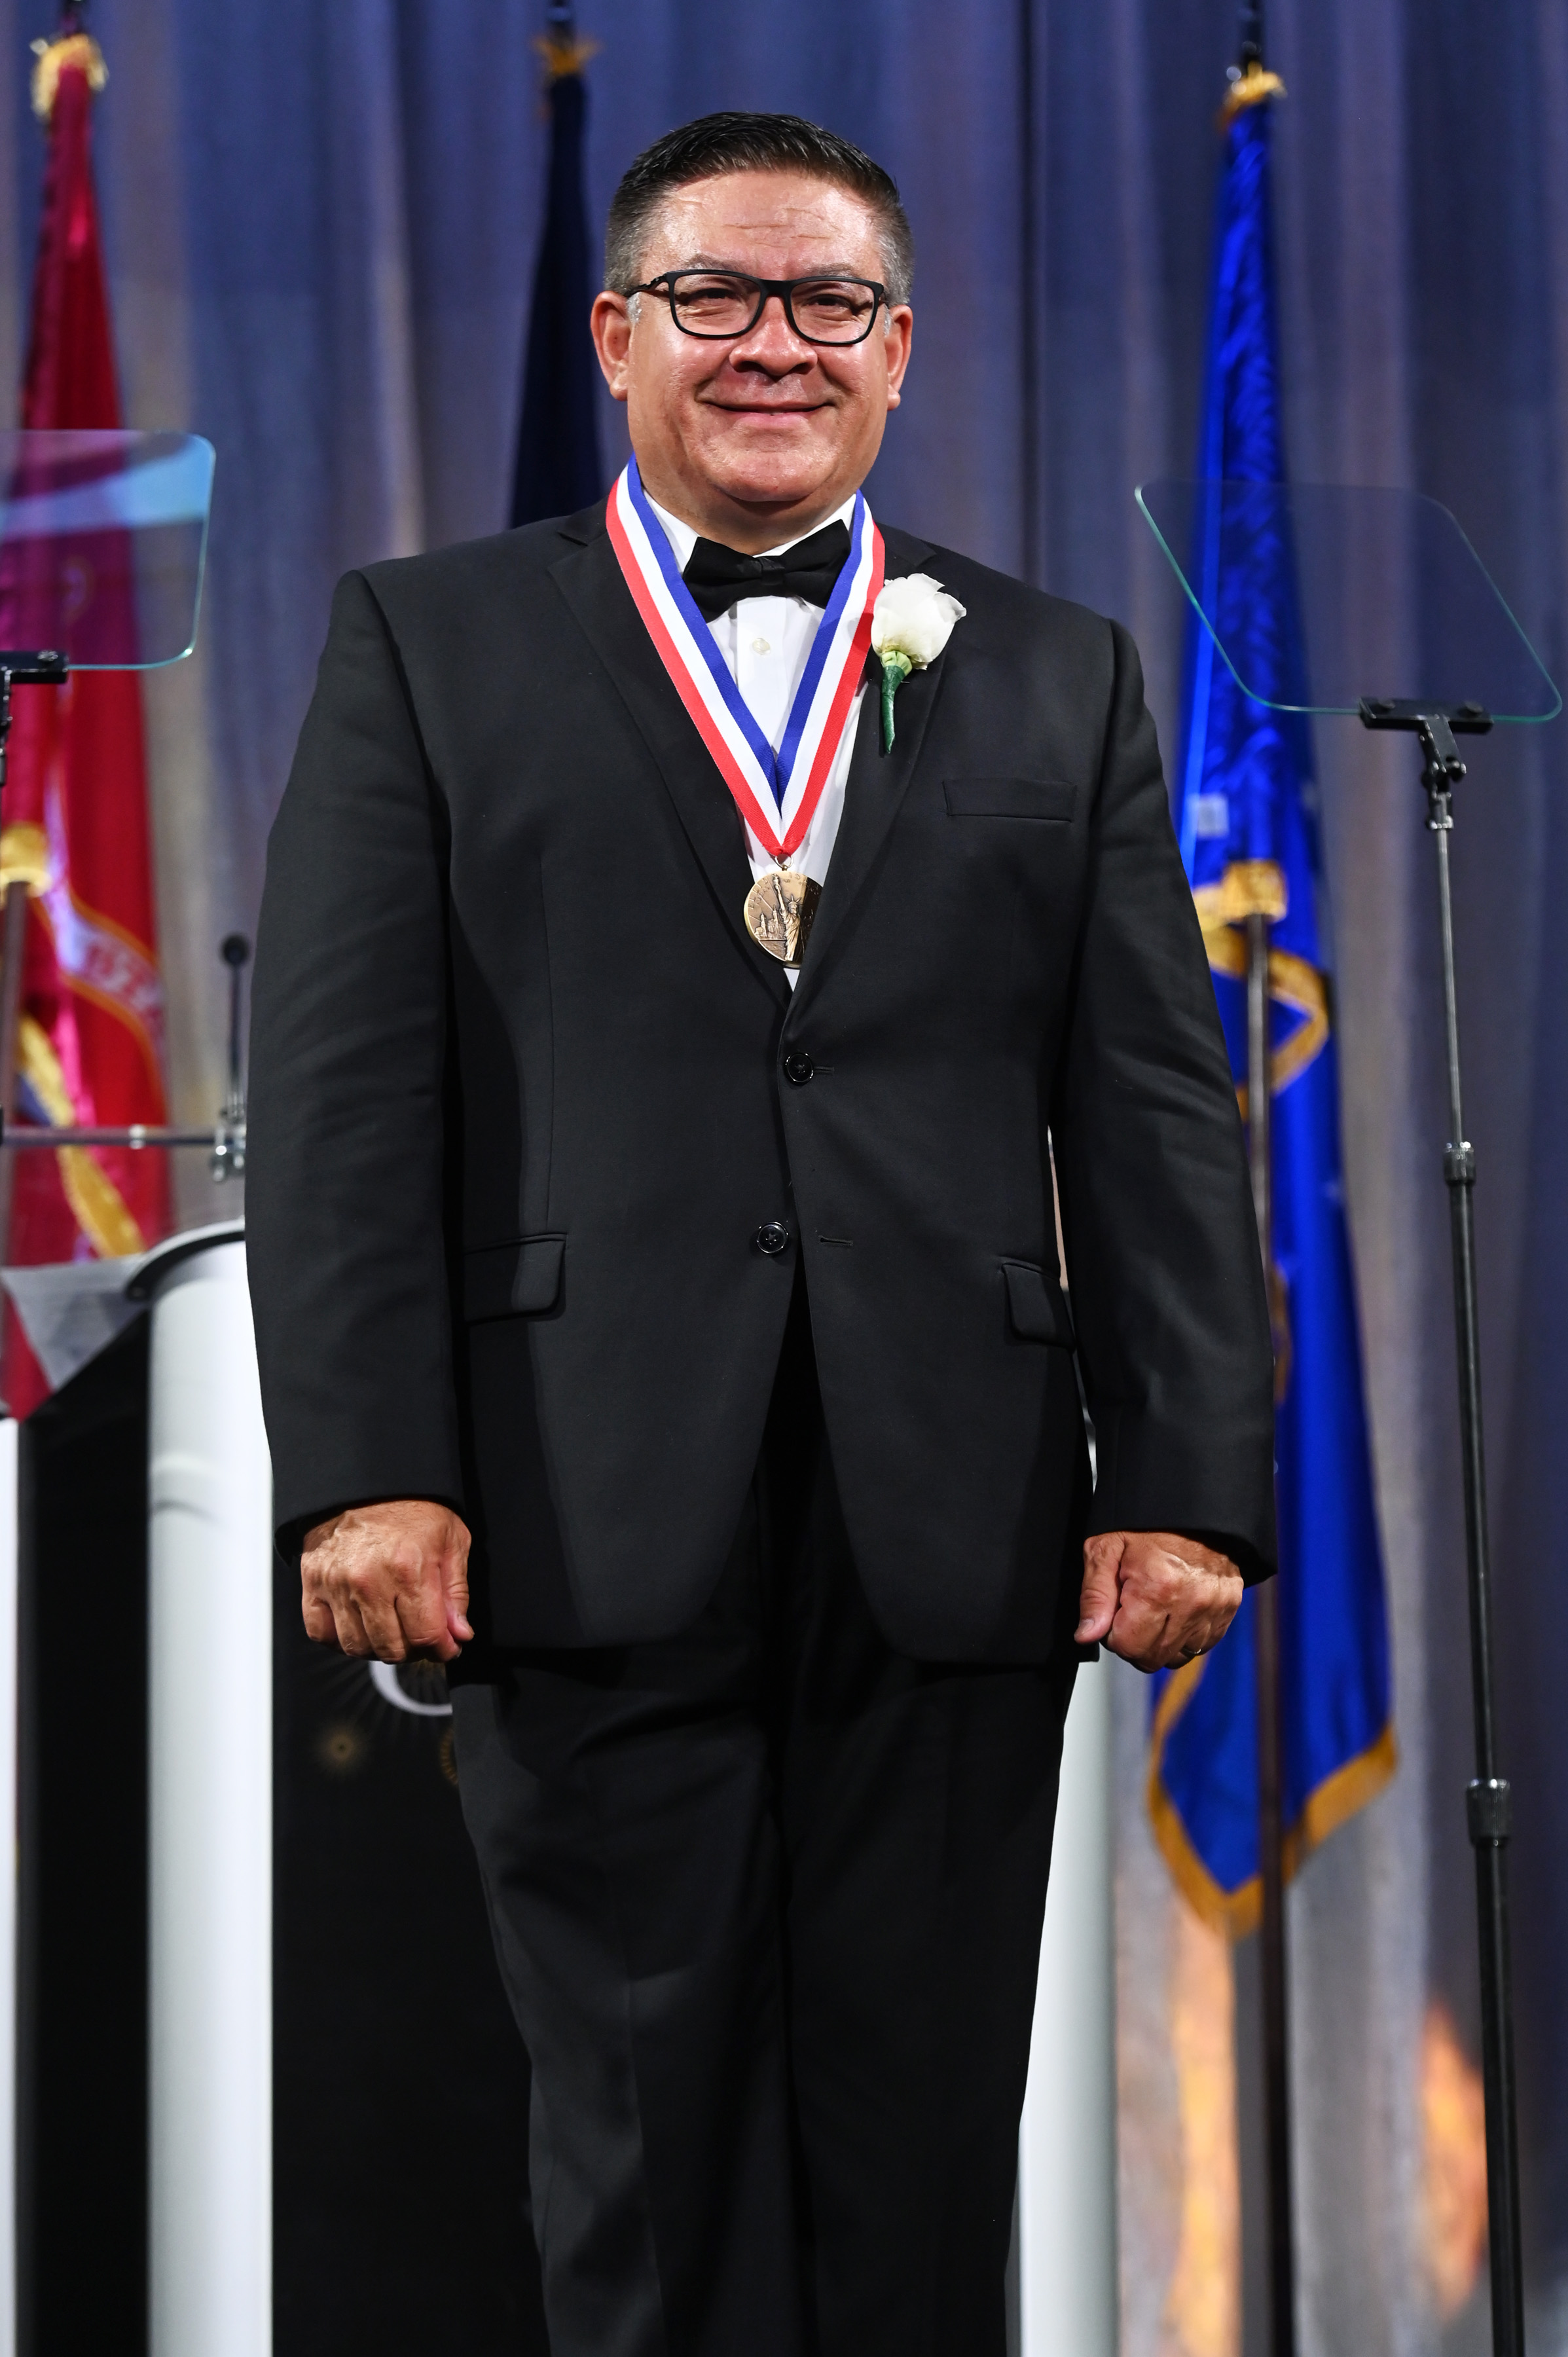 Salud Carbajal Awarded ‘Ellis Island Medal of Honor’